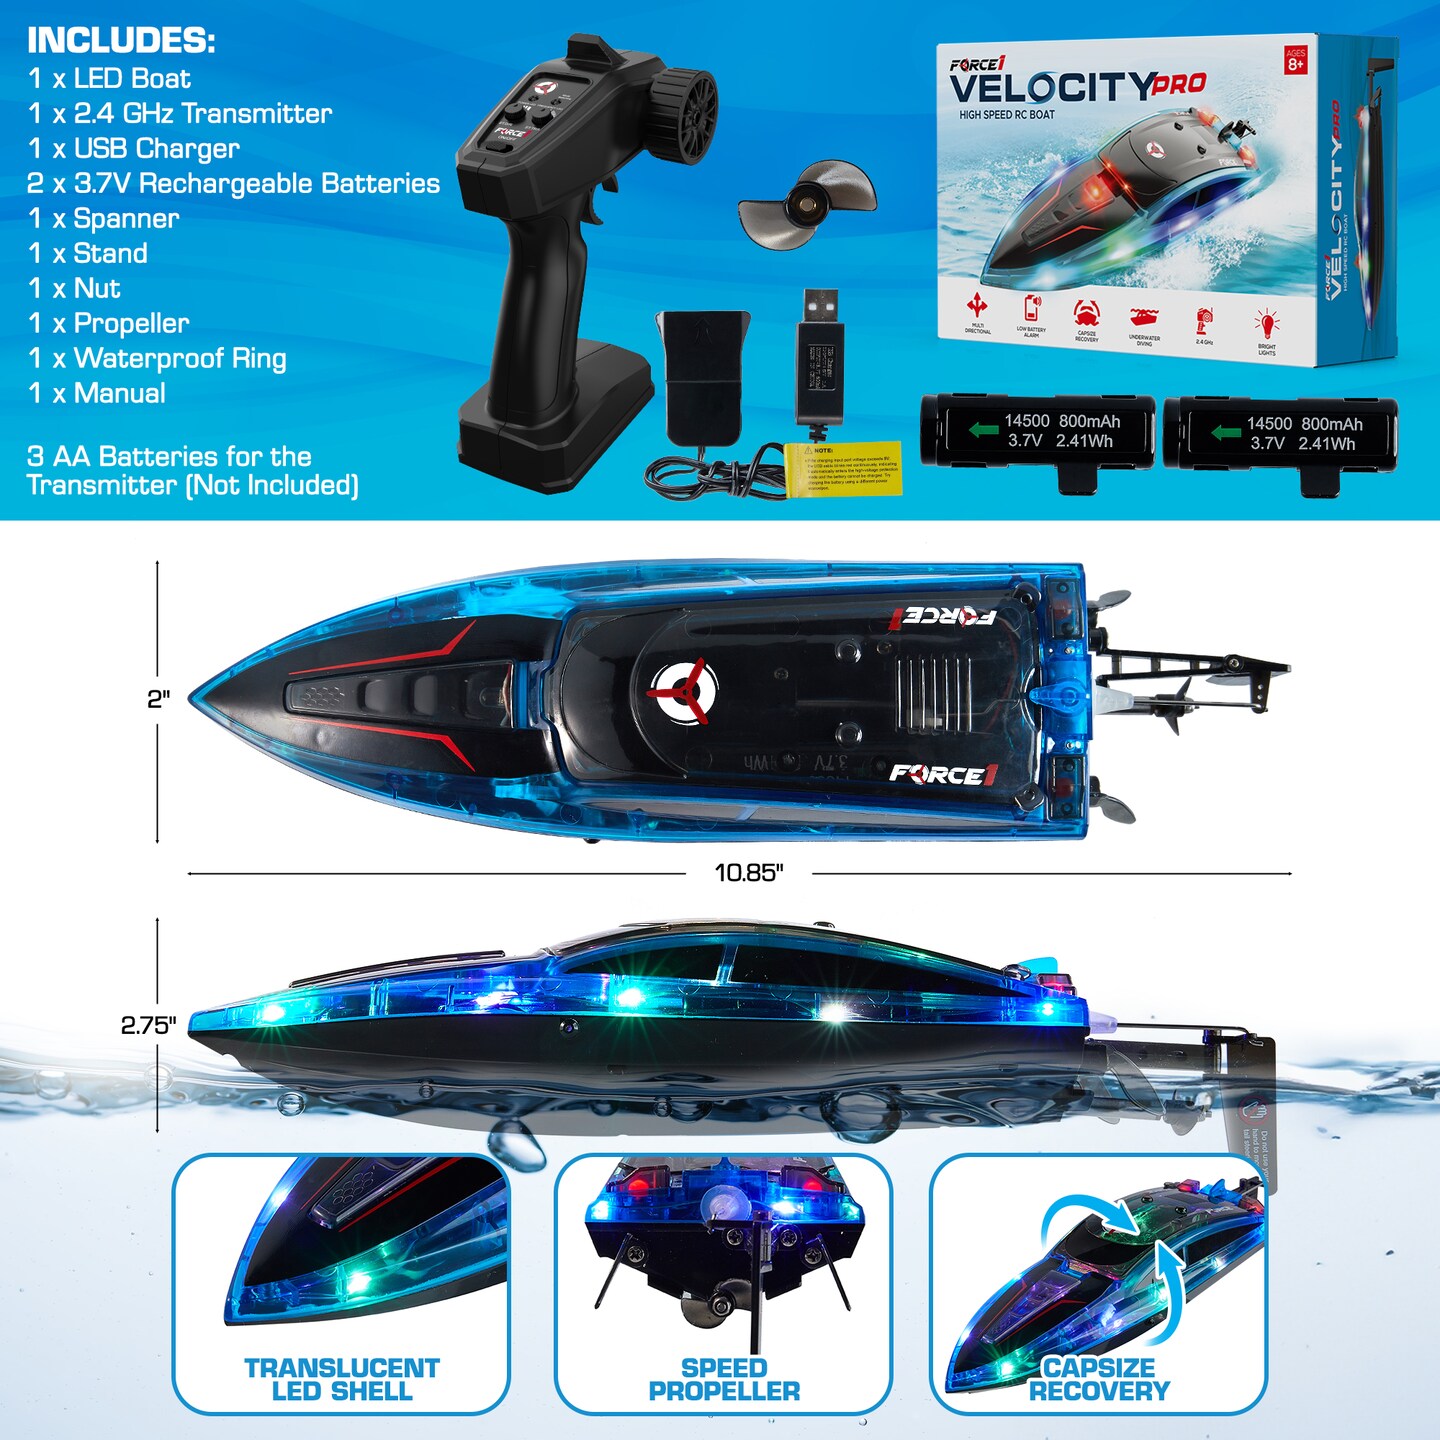 Force1 Velocity Pro LED RC Boat